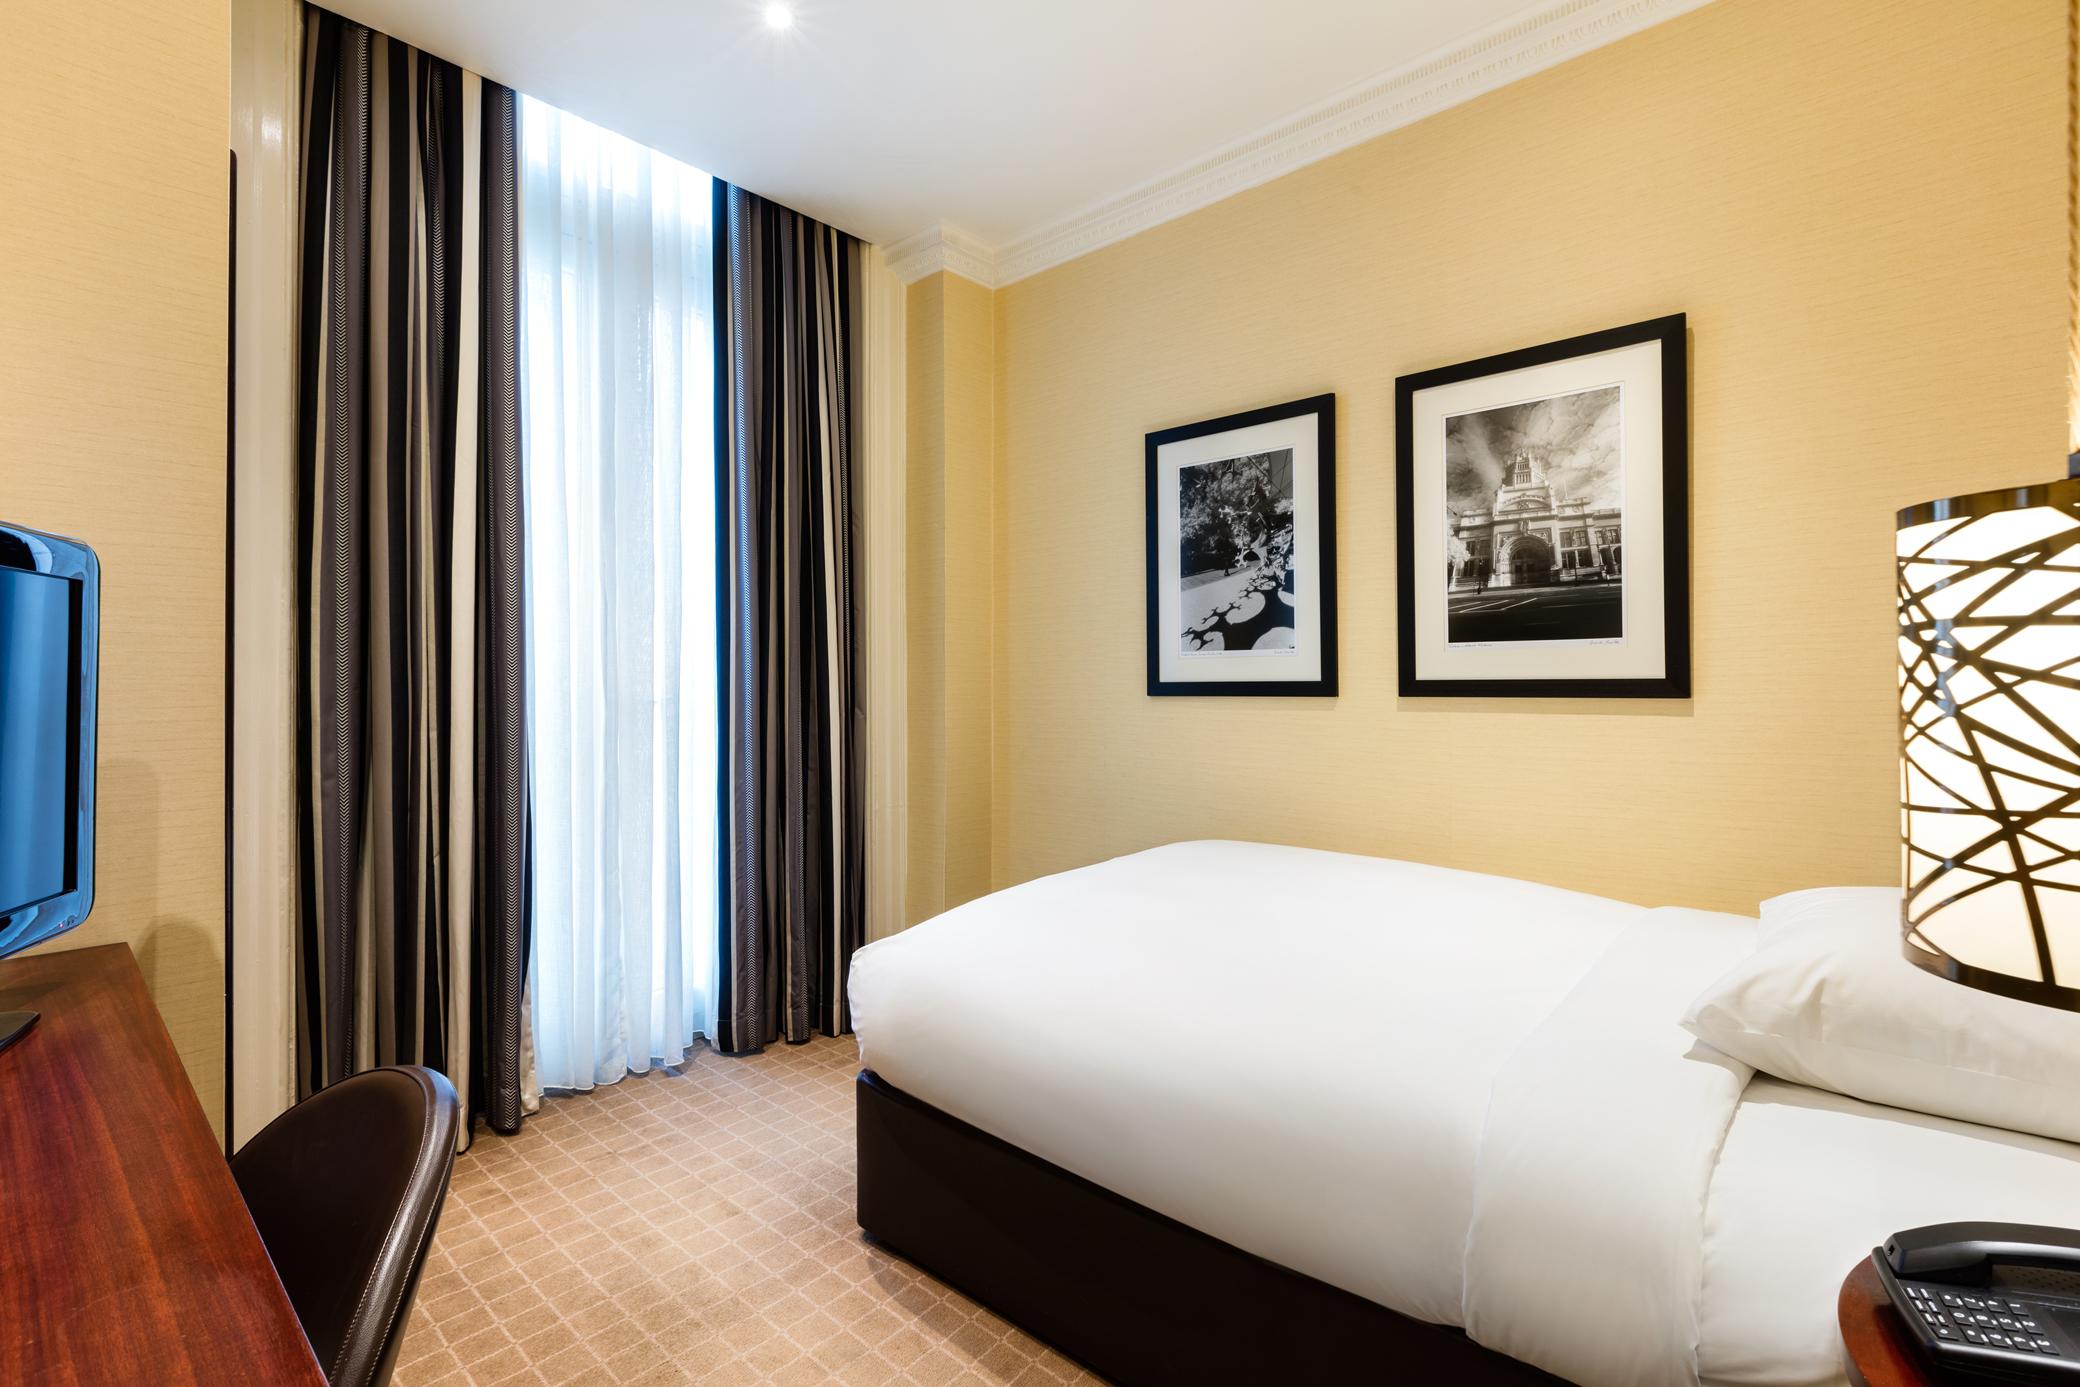 Superior Individual Room Radisson Blu Edwardian Vanderbilt Hotel, London London 020 7761 9000